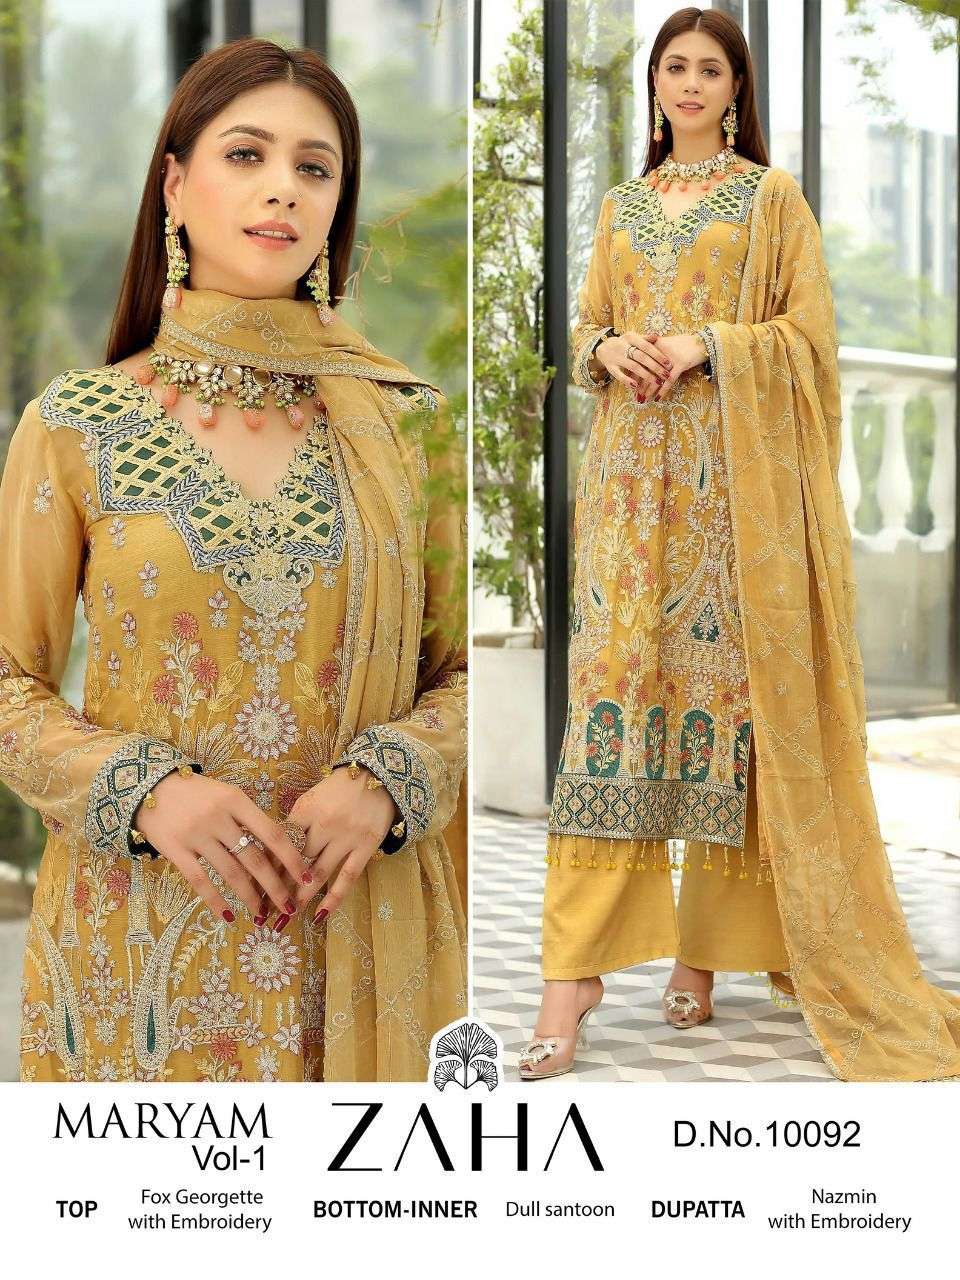 zaha 10092 design single color embroidery pakistani dress 